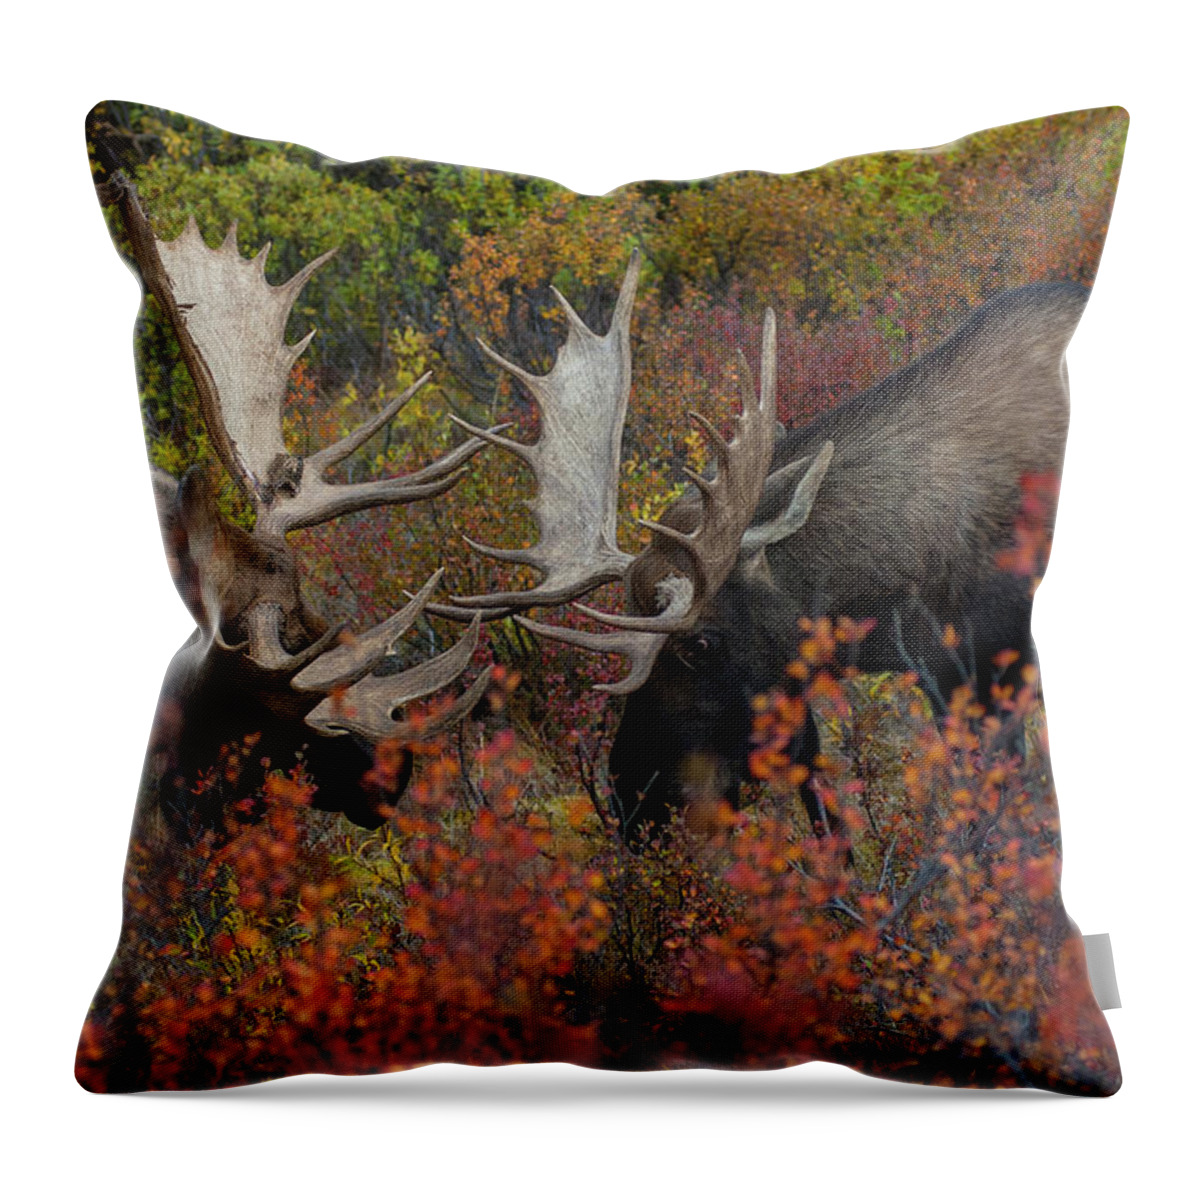 Alaska Throw Pillow featuring the photograph DDP DJD Rutting Moose 165 by David Drew